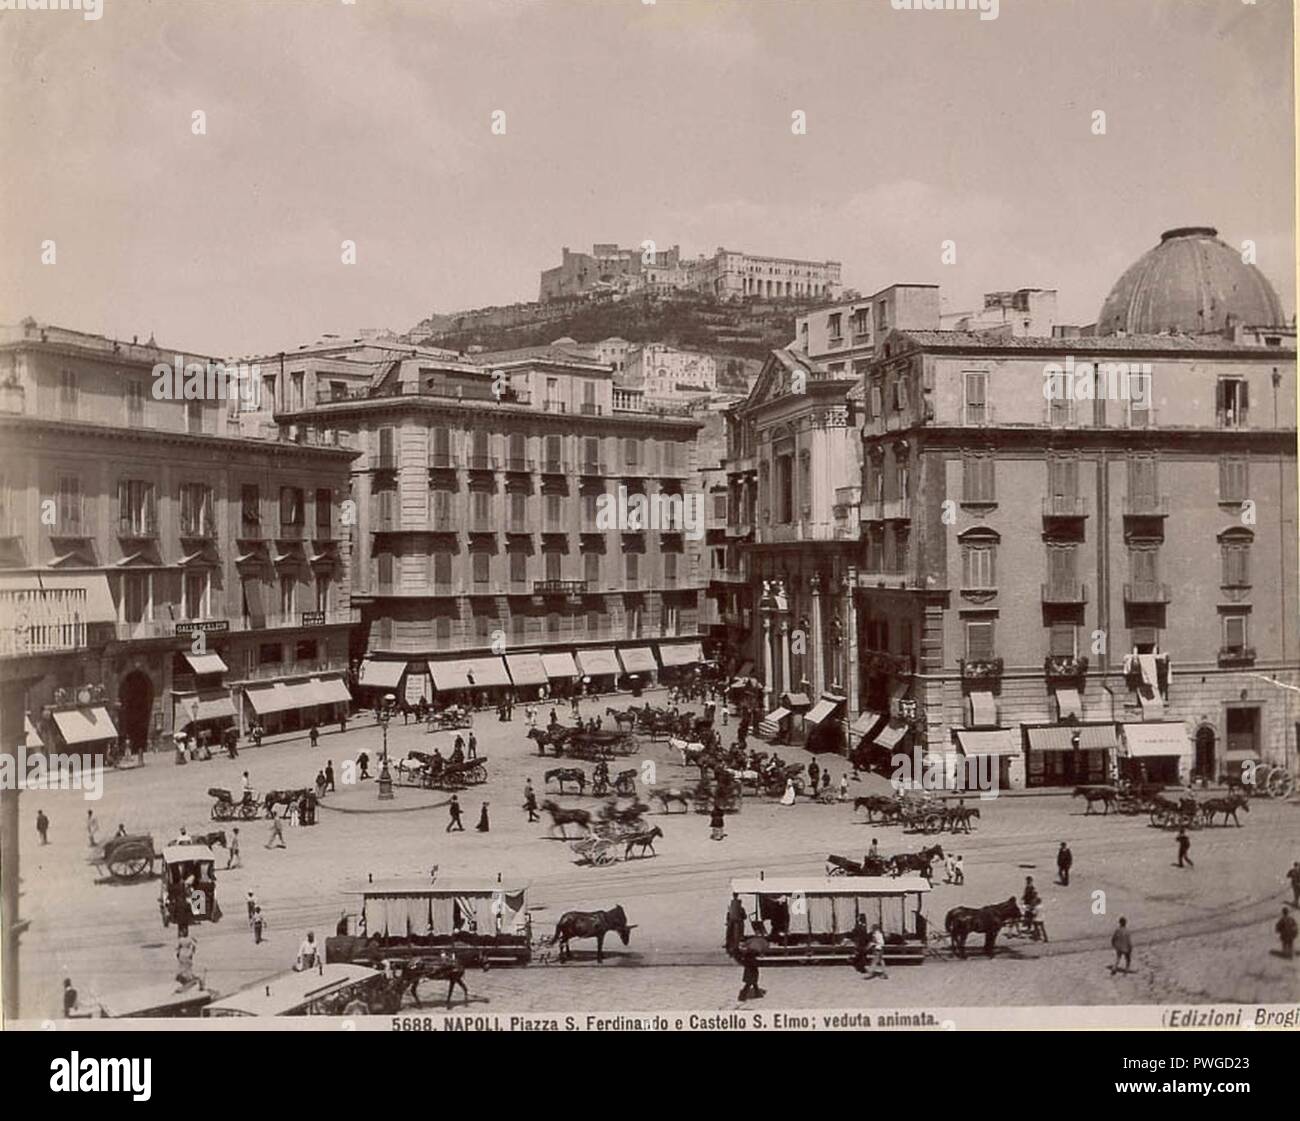 Brogi, GIACOMO (1822-1881) - n. 5688 - Napoli, Piazza S. Ferdinando e Castello S. Elmo - veduta animata. Foto de stock